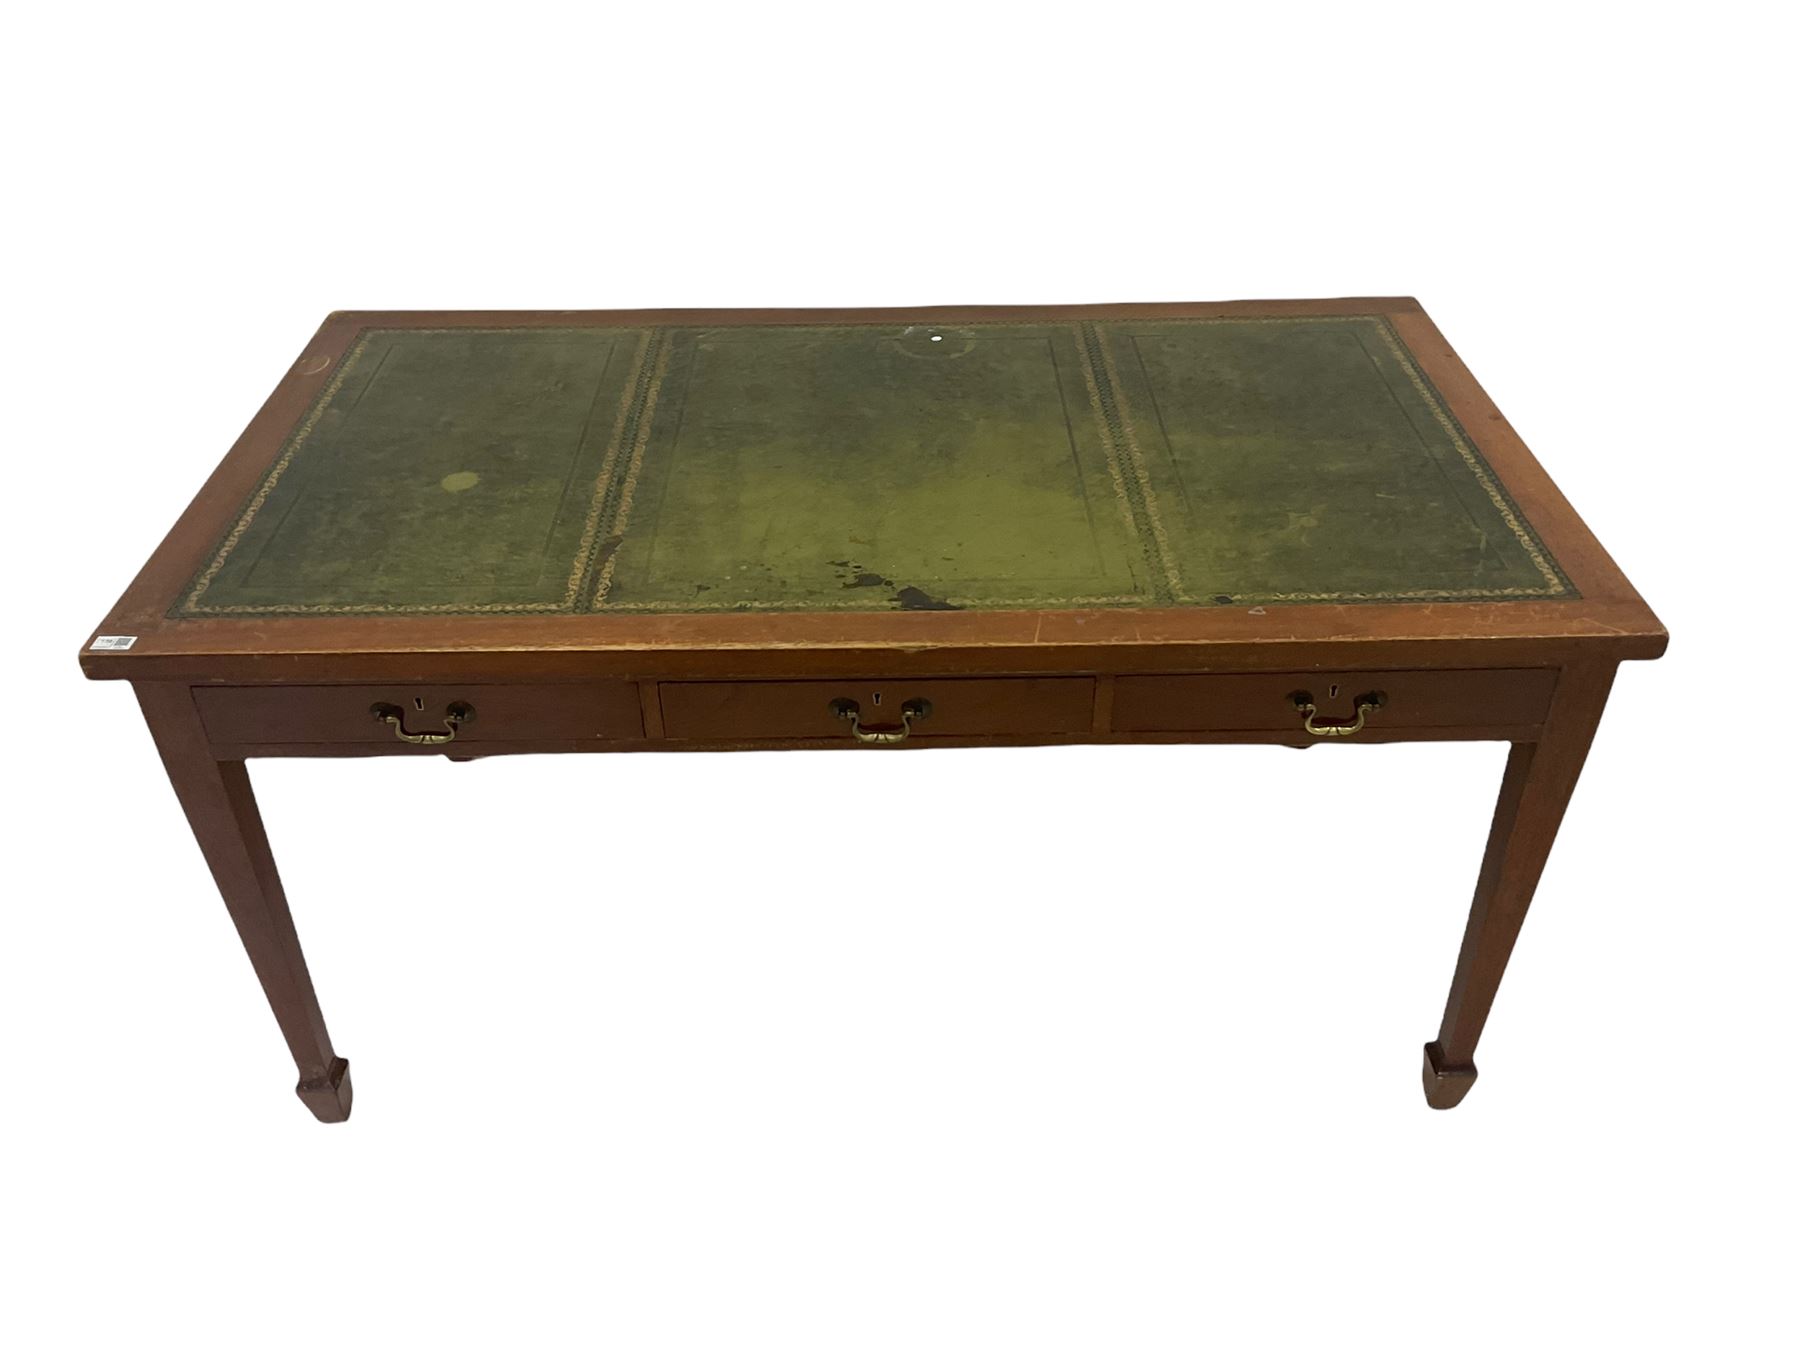 20th century mahogany writing library table - Image 2 of 4